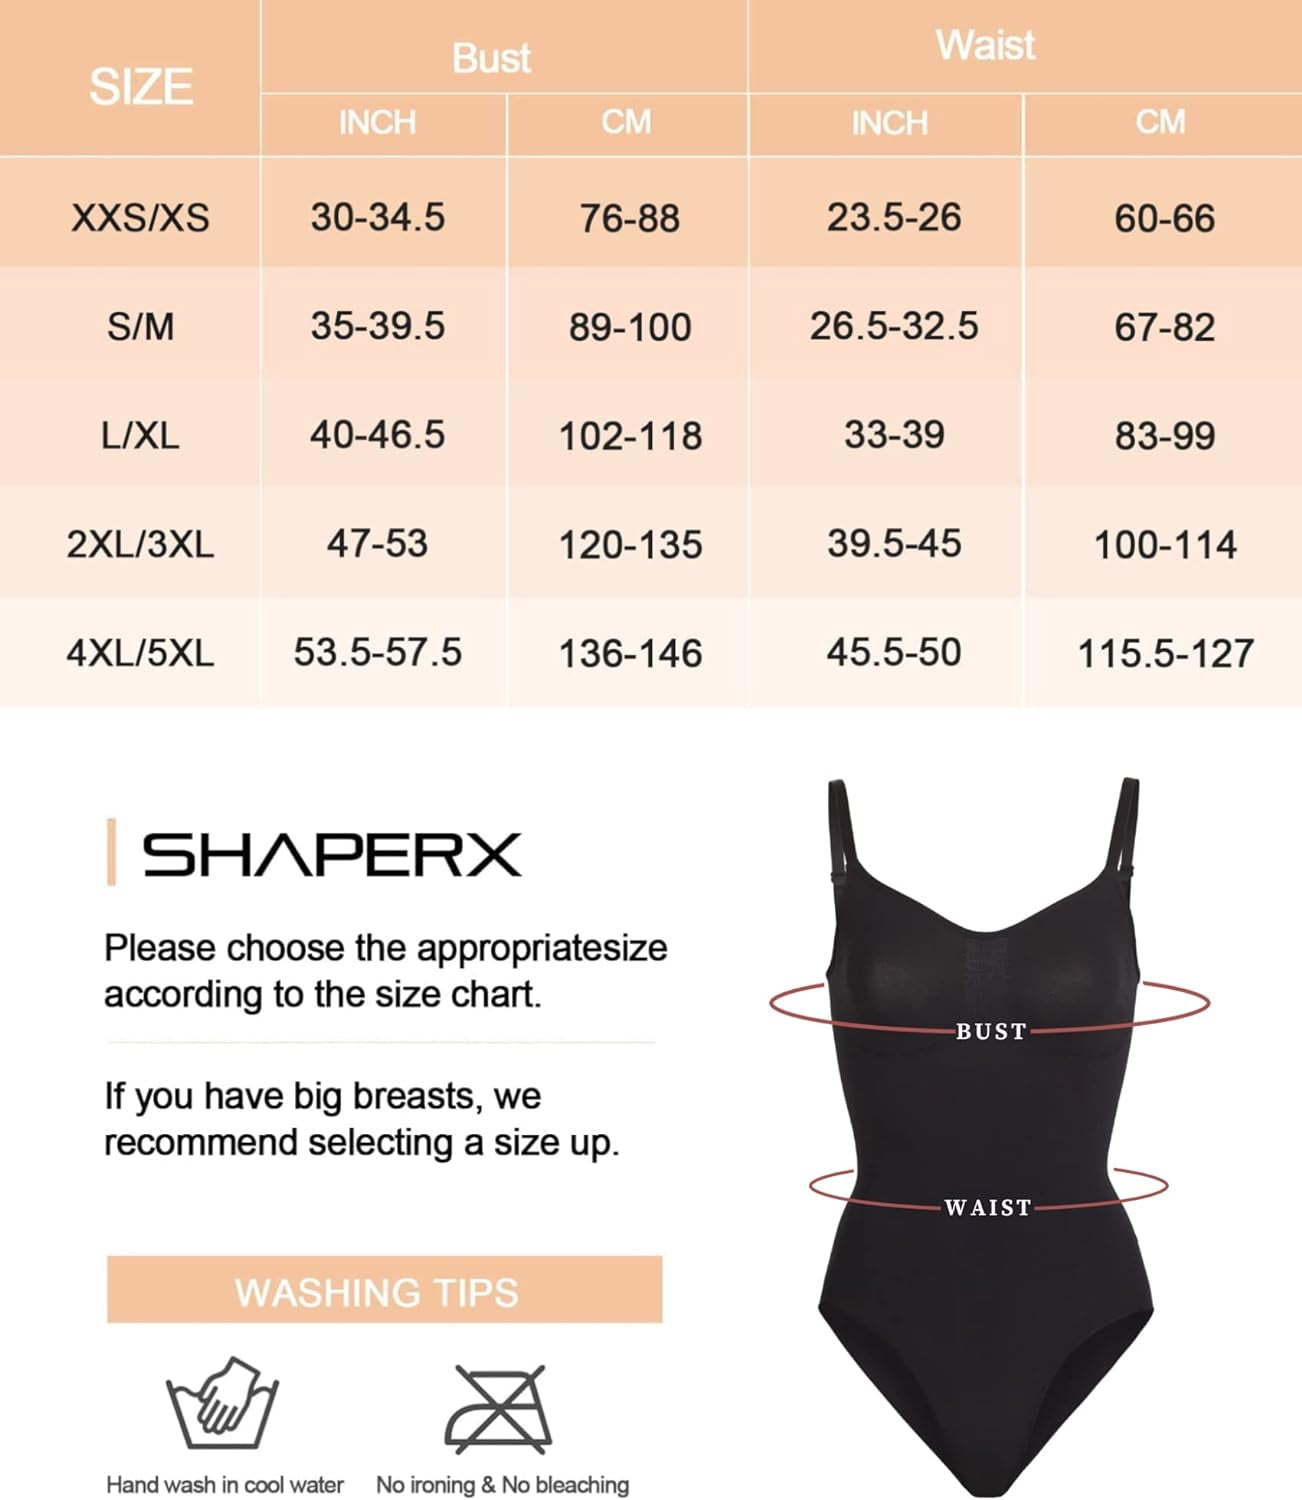 Bodysuit for Women Tummy Control Shapewear Seamless Sculpting Thong Body Shaper Tank Top